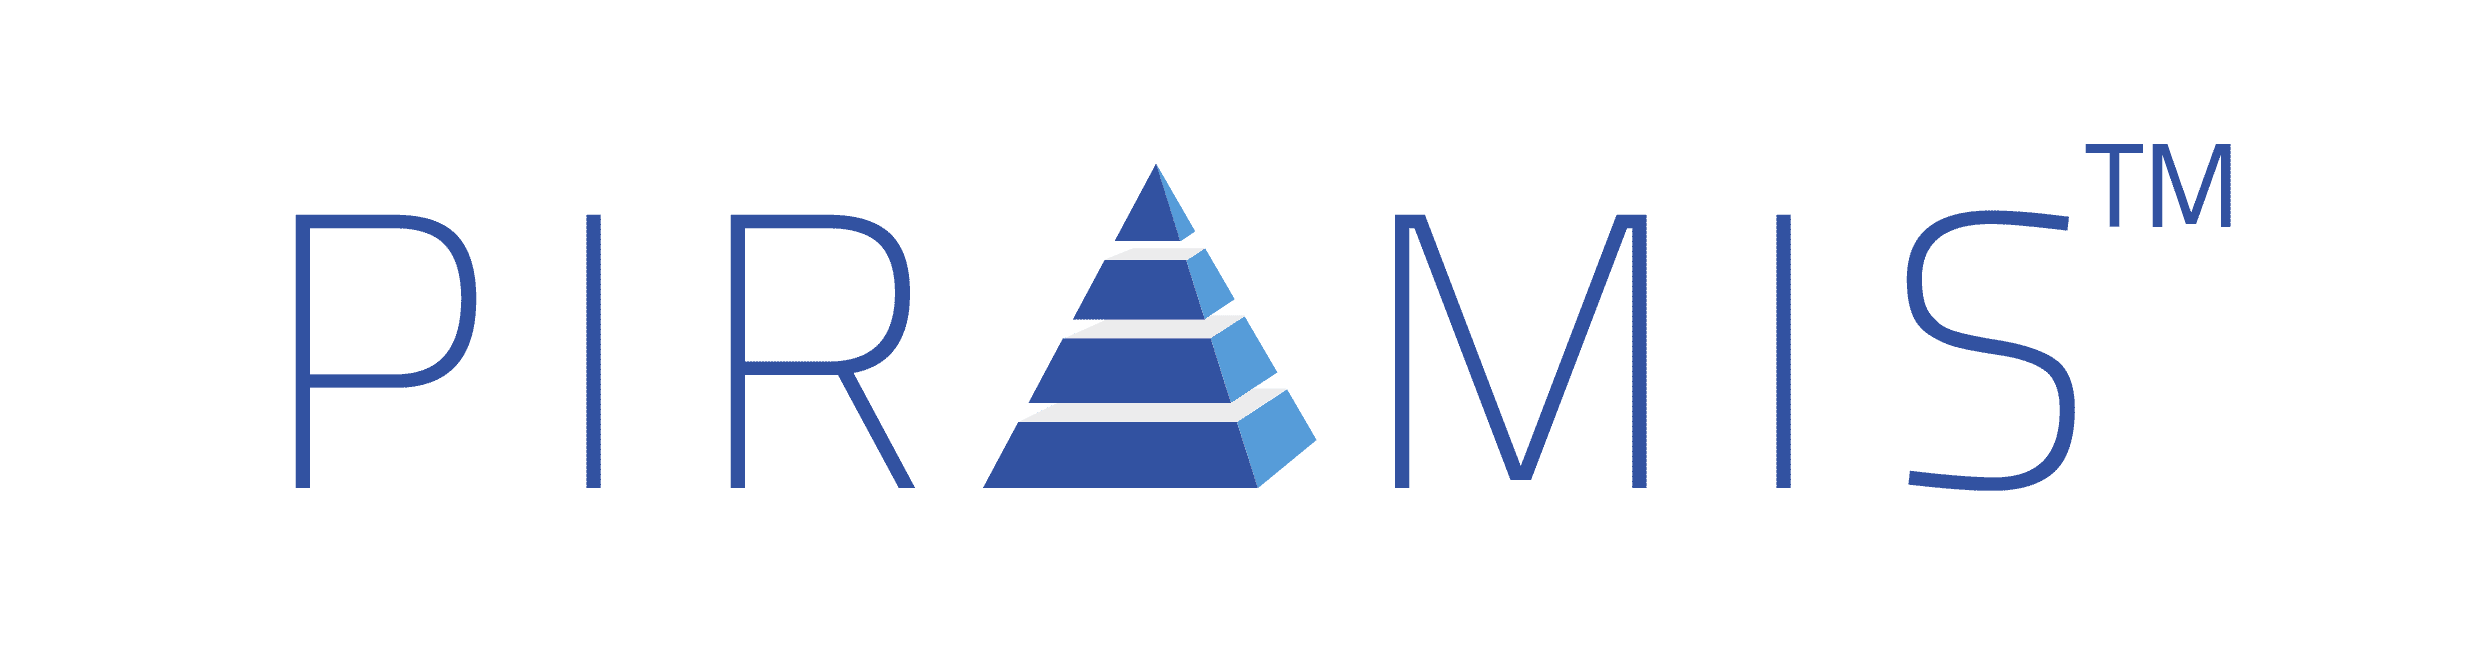 Piramis logo